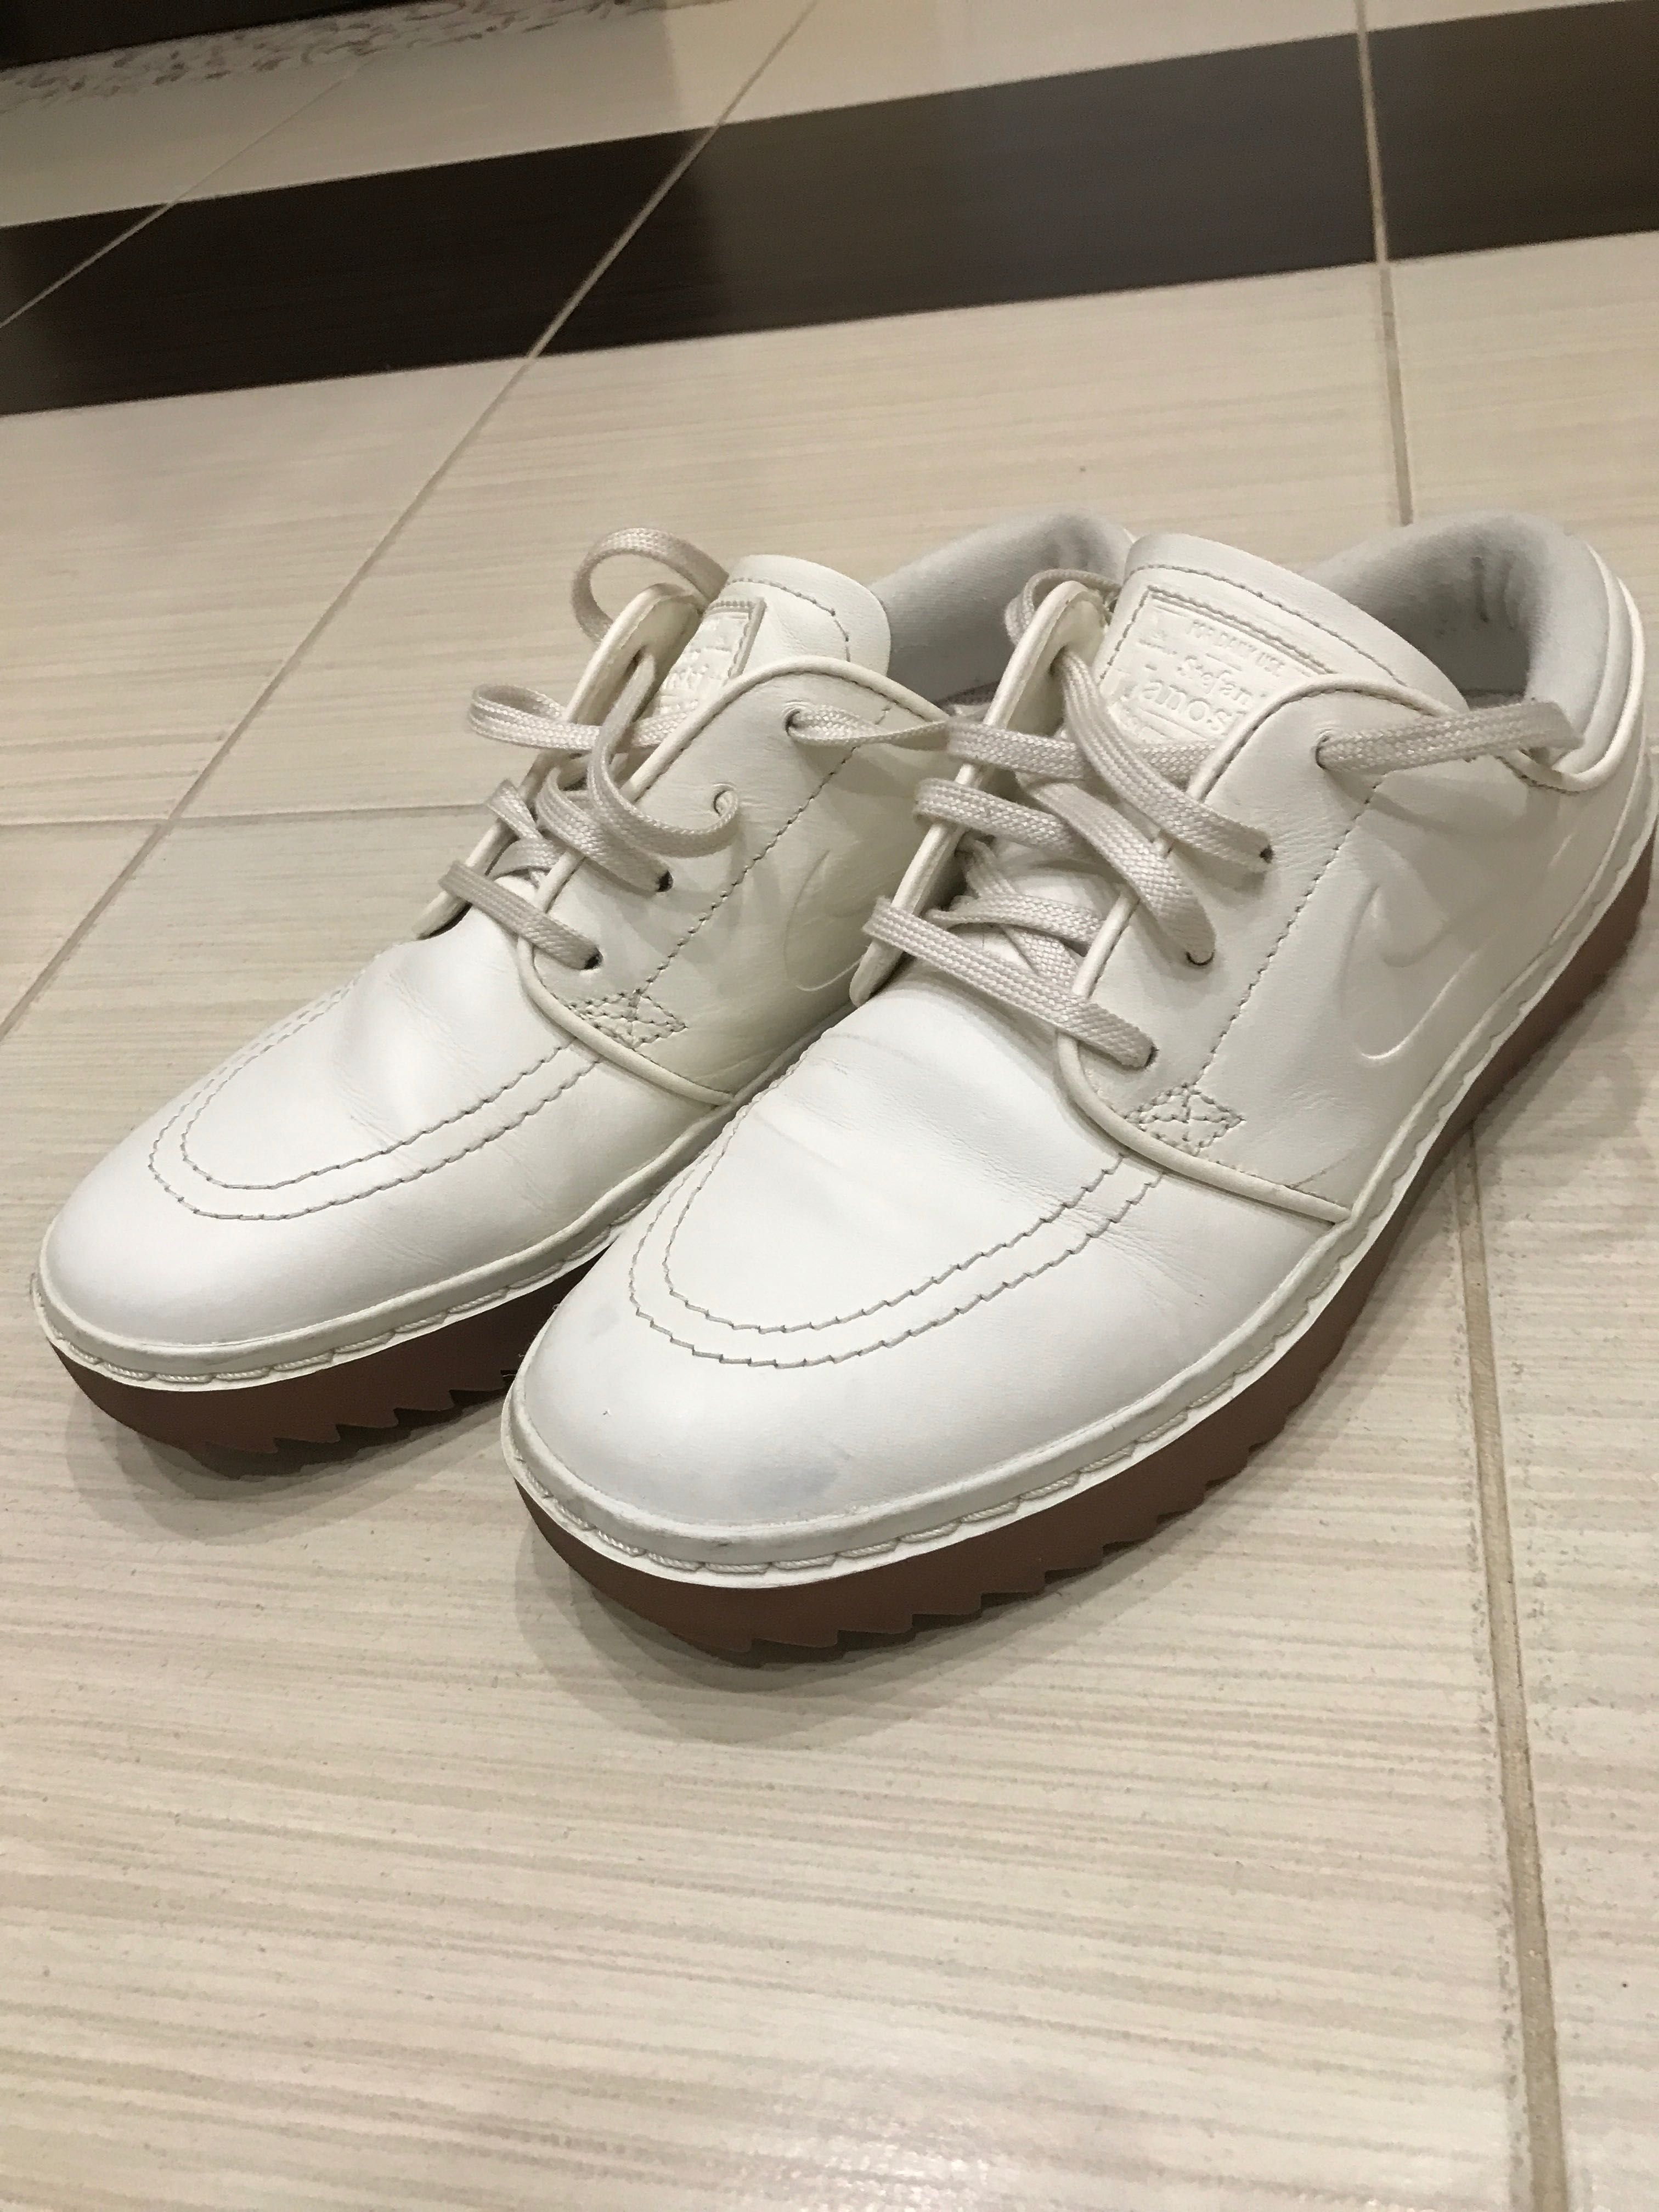 Nike Janoski G Sail Gum Leather Spikeless Golf Shoes